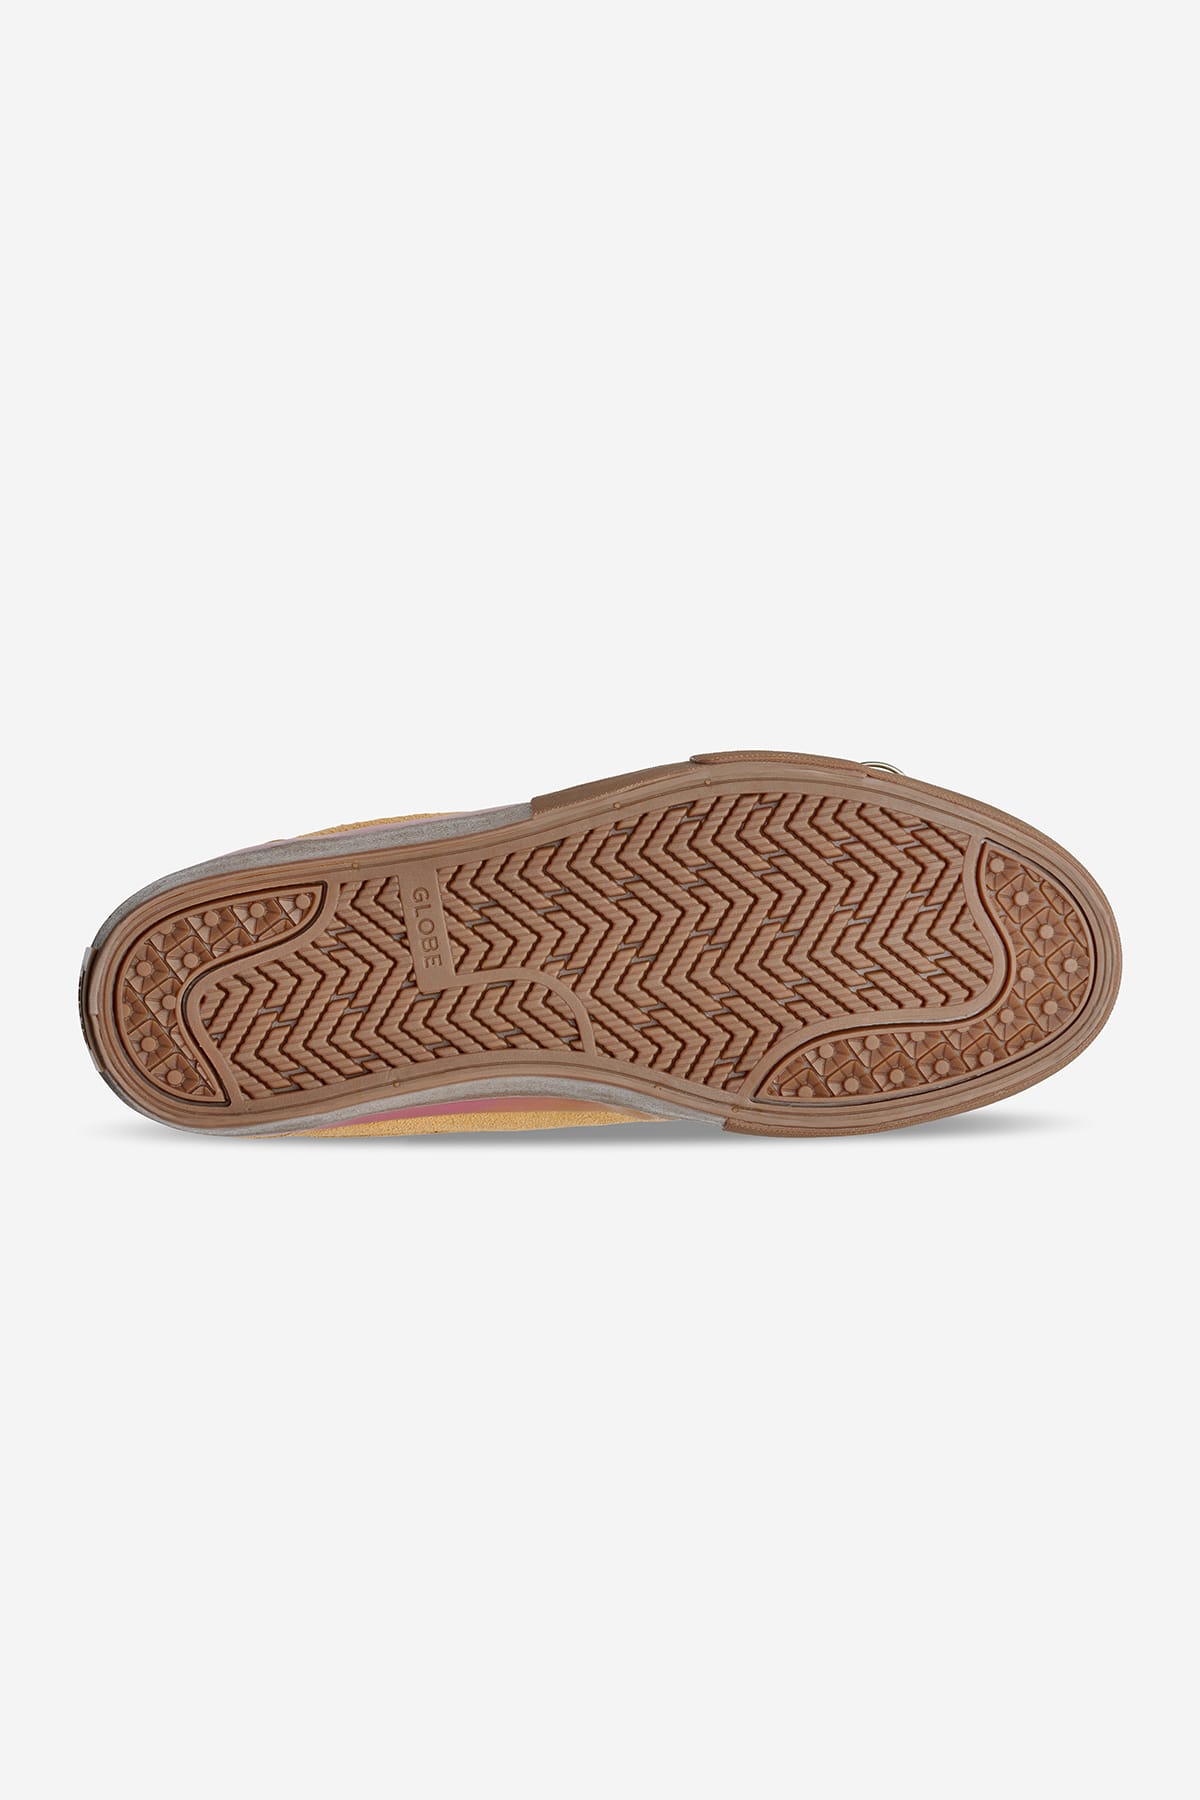 Globe - Mahalo Plus - Caril/Gum - skateboard Sapatos